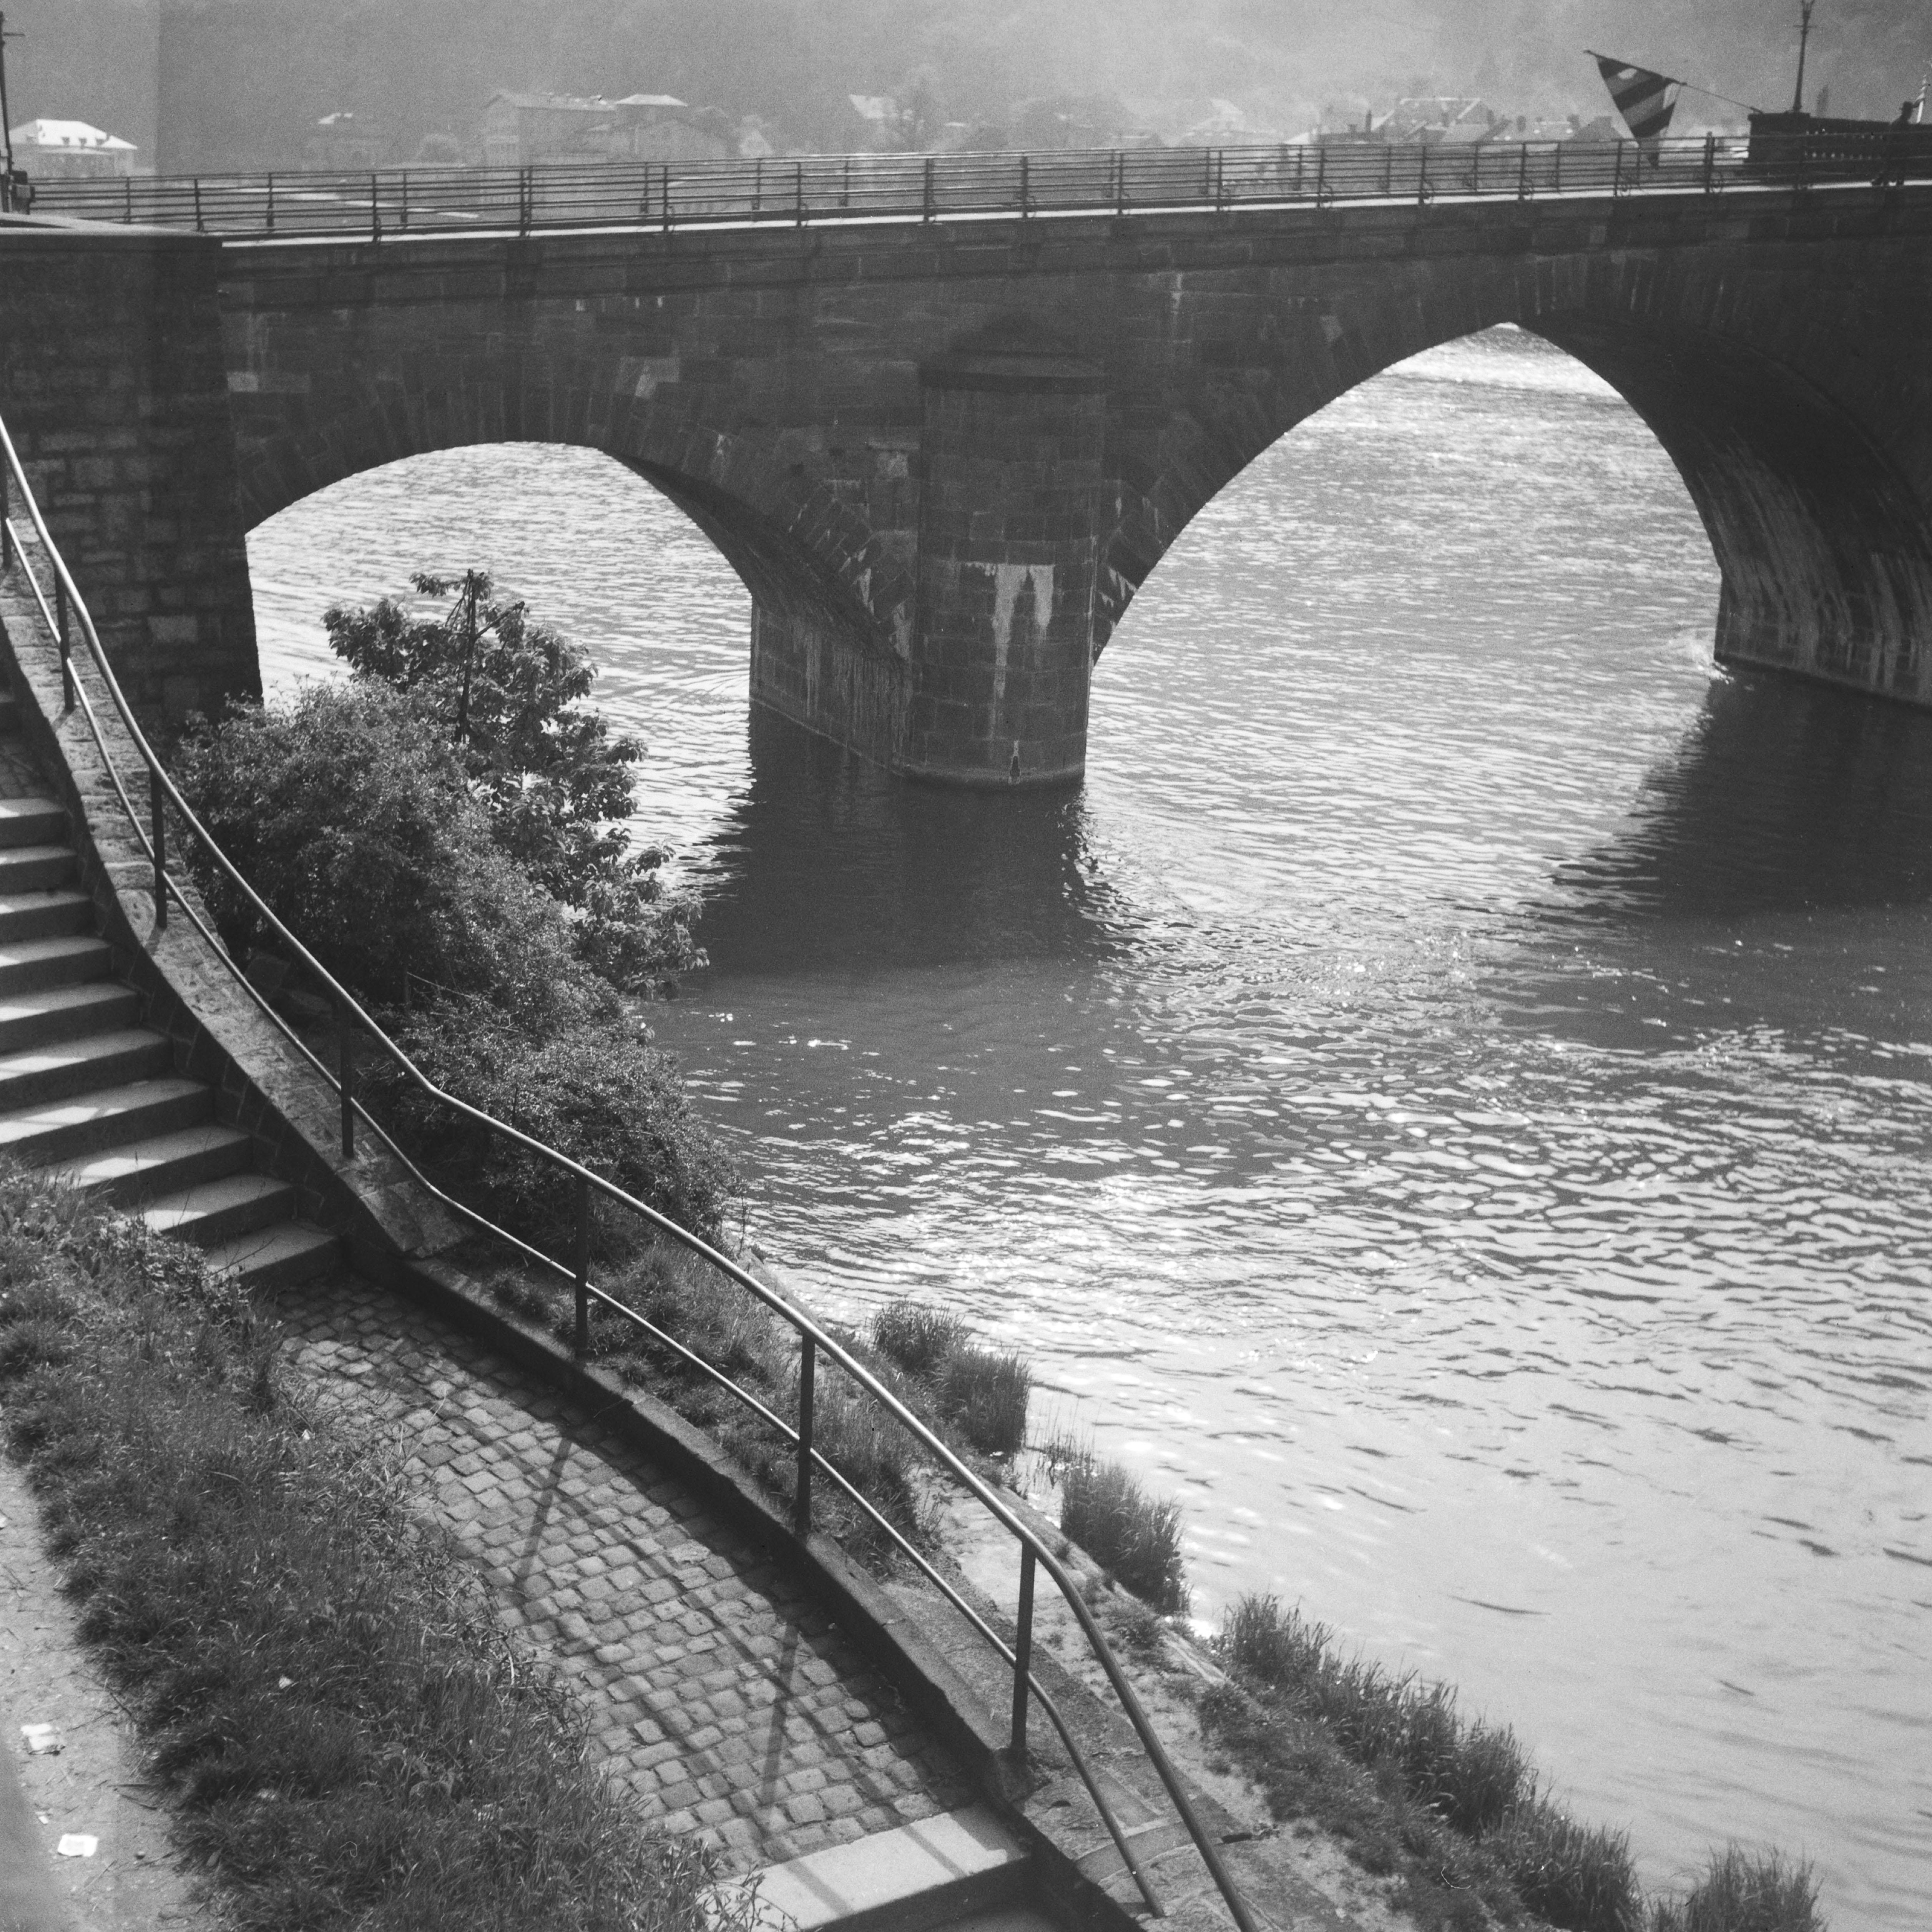 Karl Heinrich Lämmel Black and White Photograph - Old bridge over river Neckar at Heidelberg, Germany 1938, Printed Later 